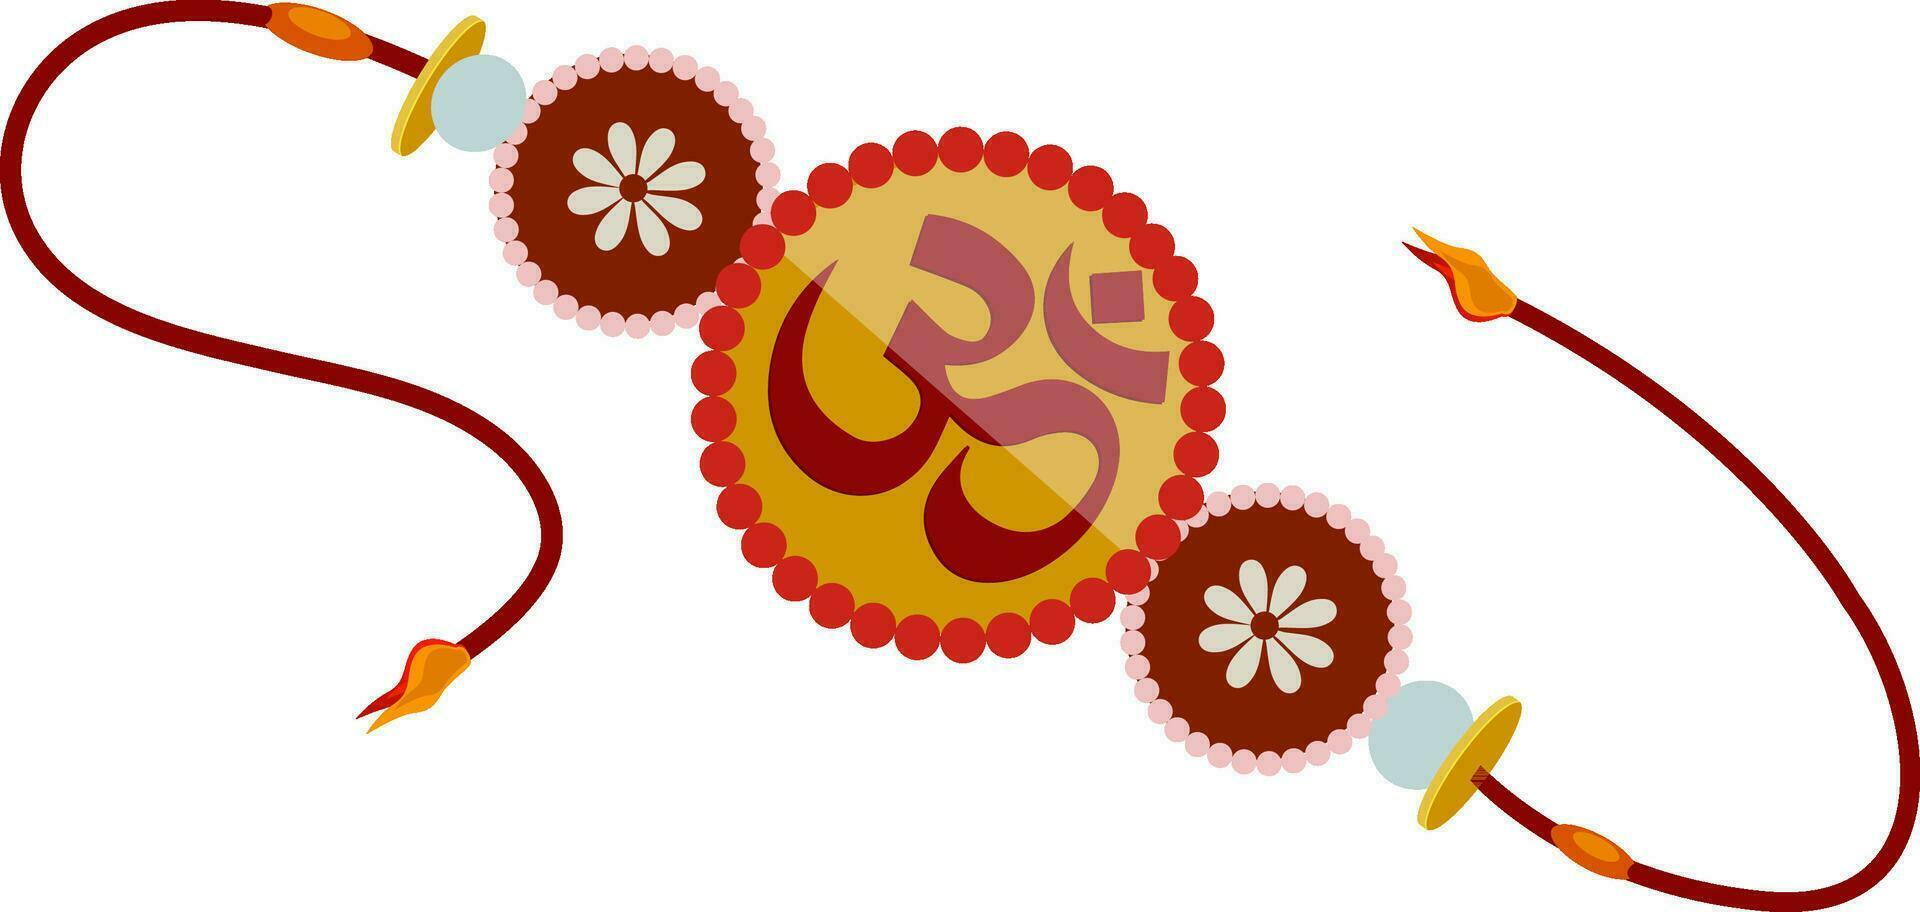 creativo rakhi con hindú santo símbolo om o aum. vector